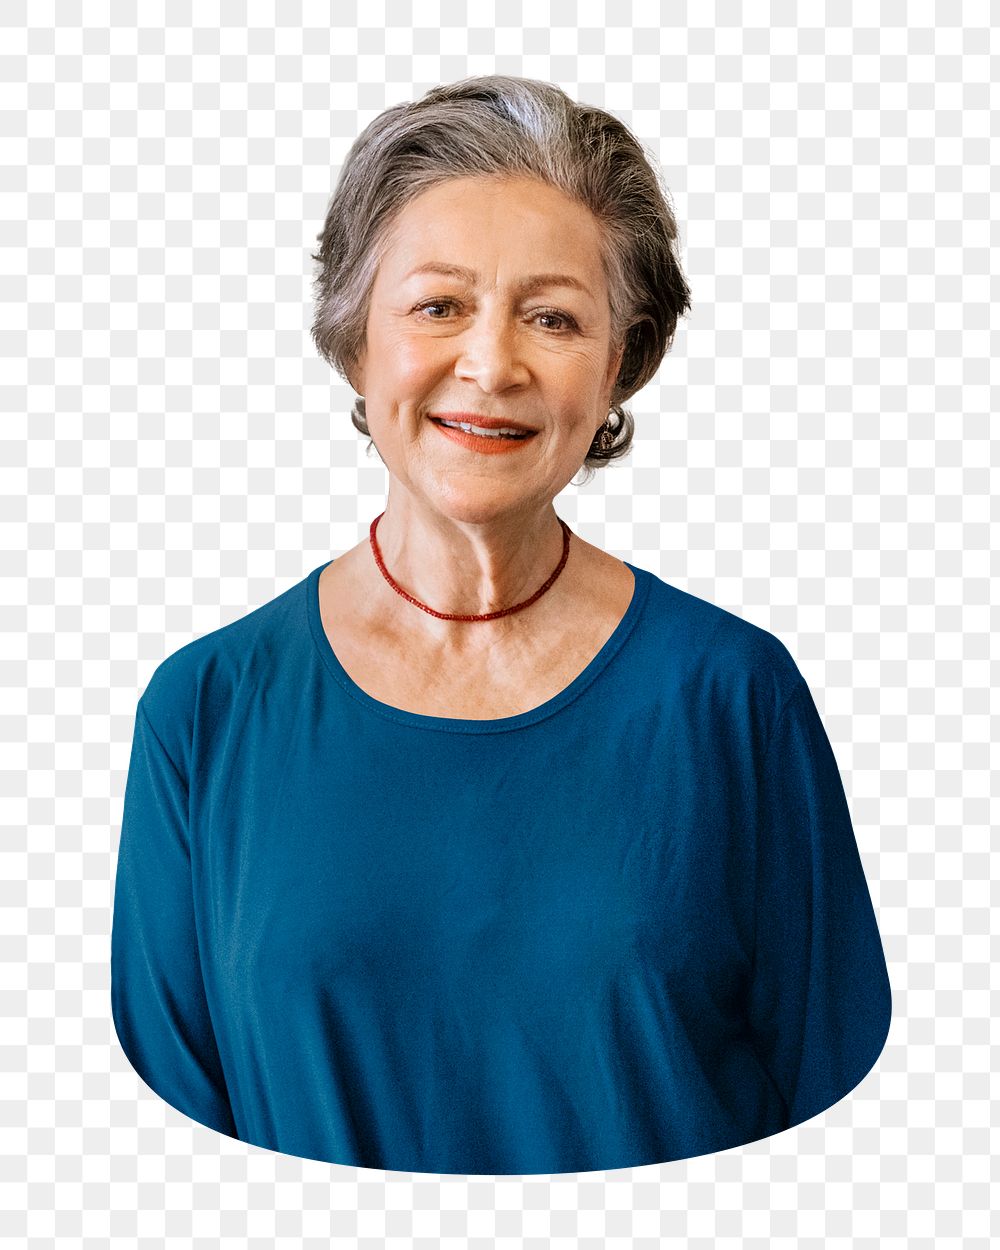 Png happy senior woman sticker, transparent background